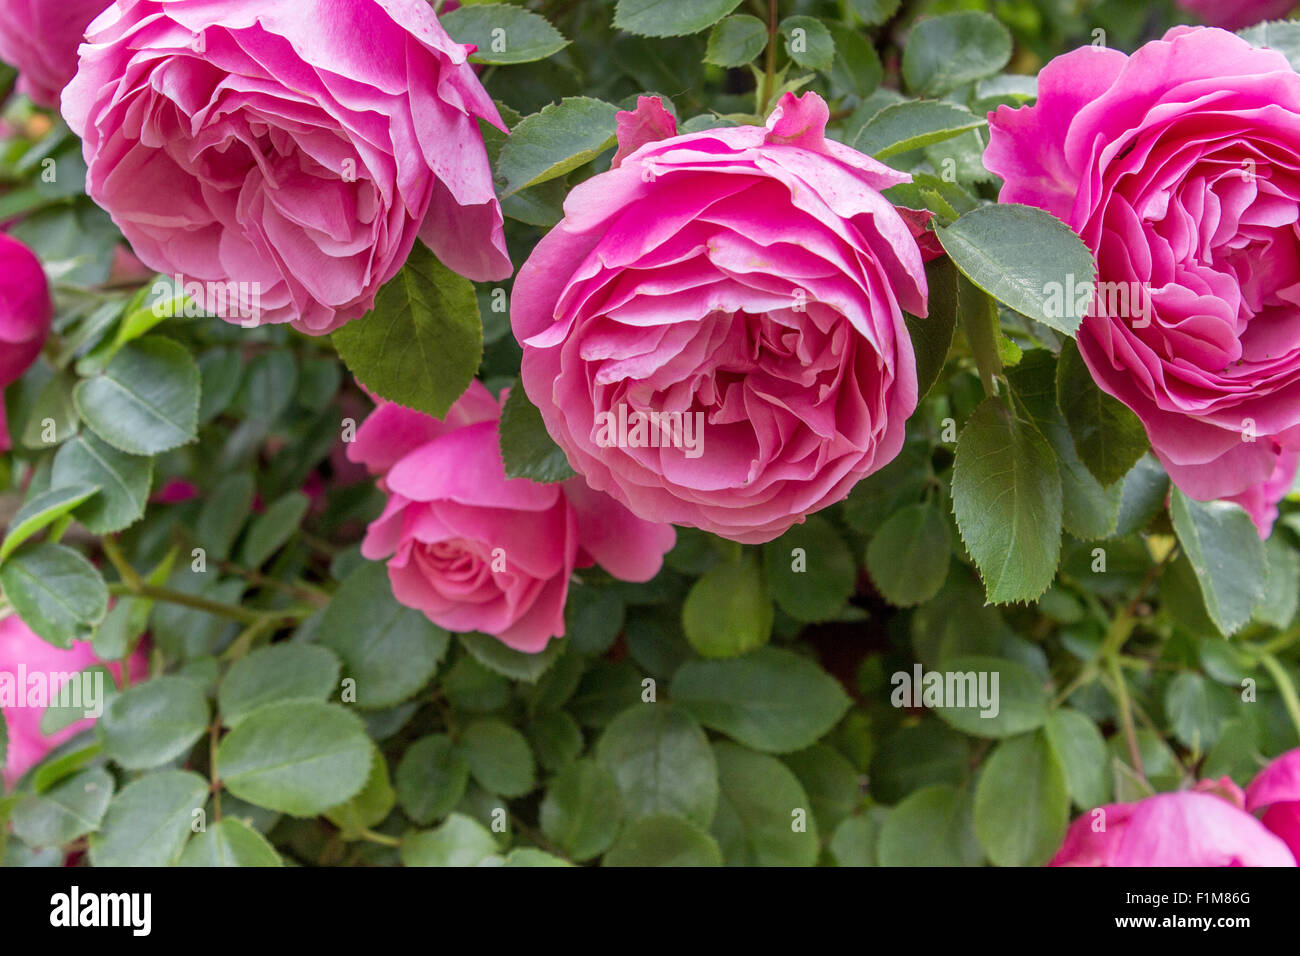 Jardin fleuri avec des roses rose Banque D'Images